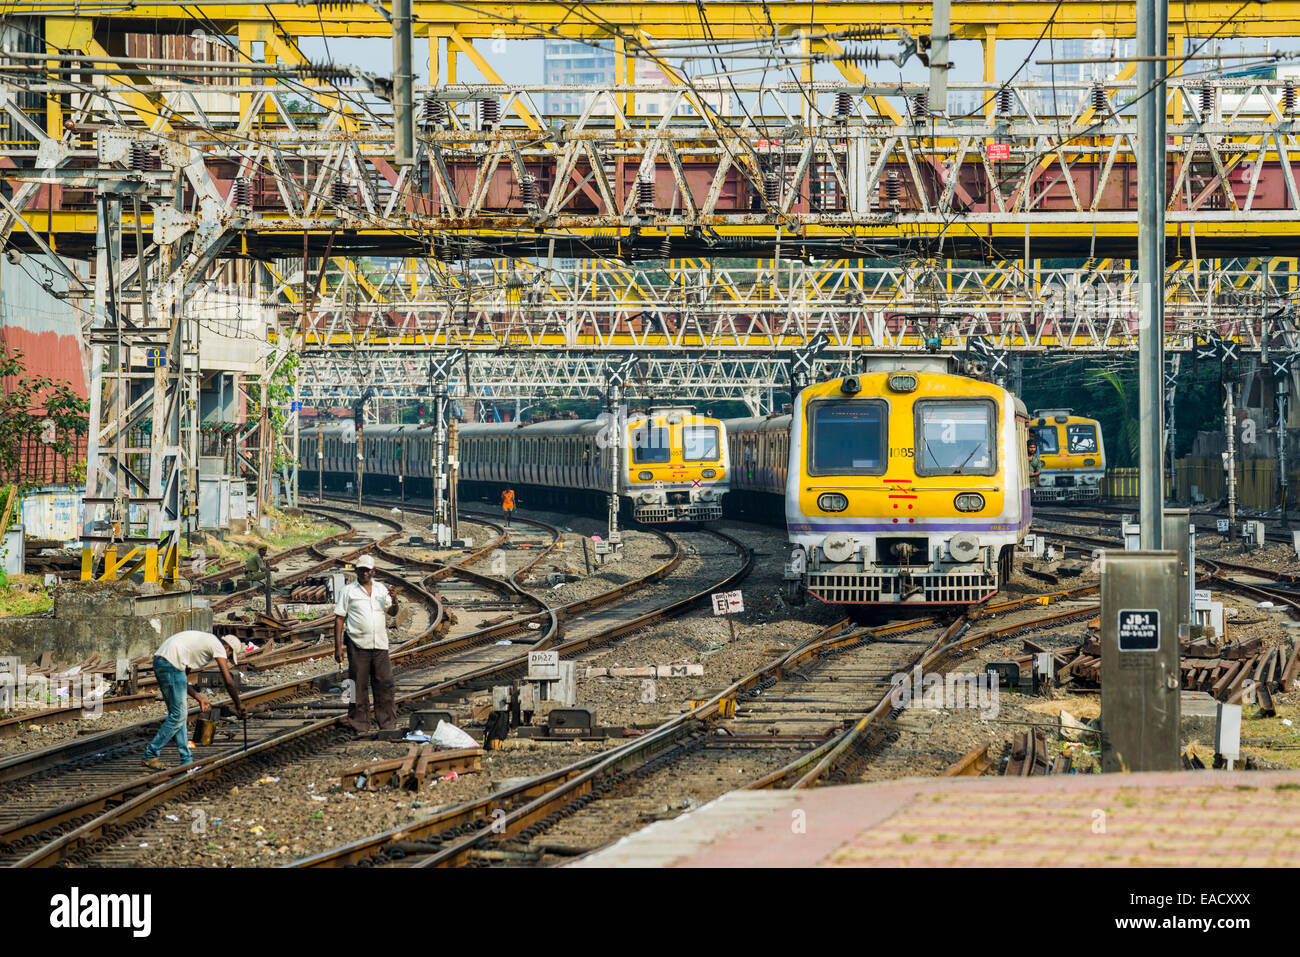 Les trains arrivant à la gare de Churchgate, Mumbai, Maharashtra, Inde Banque D'Images